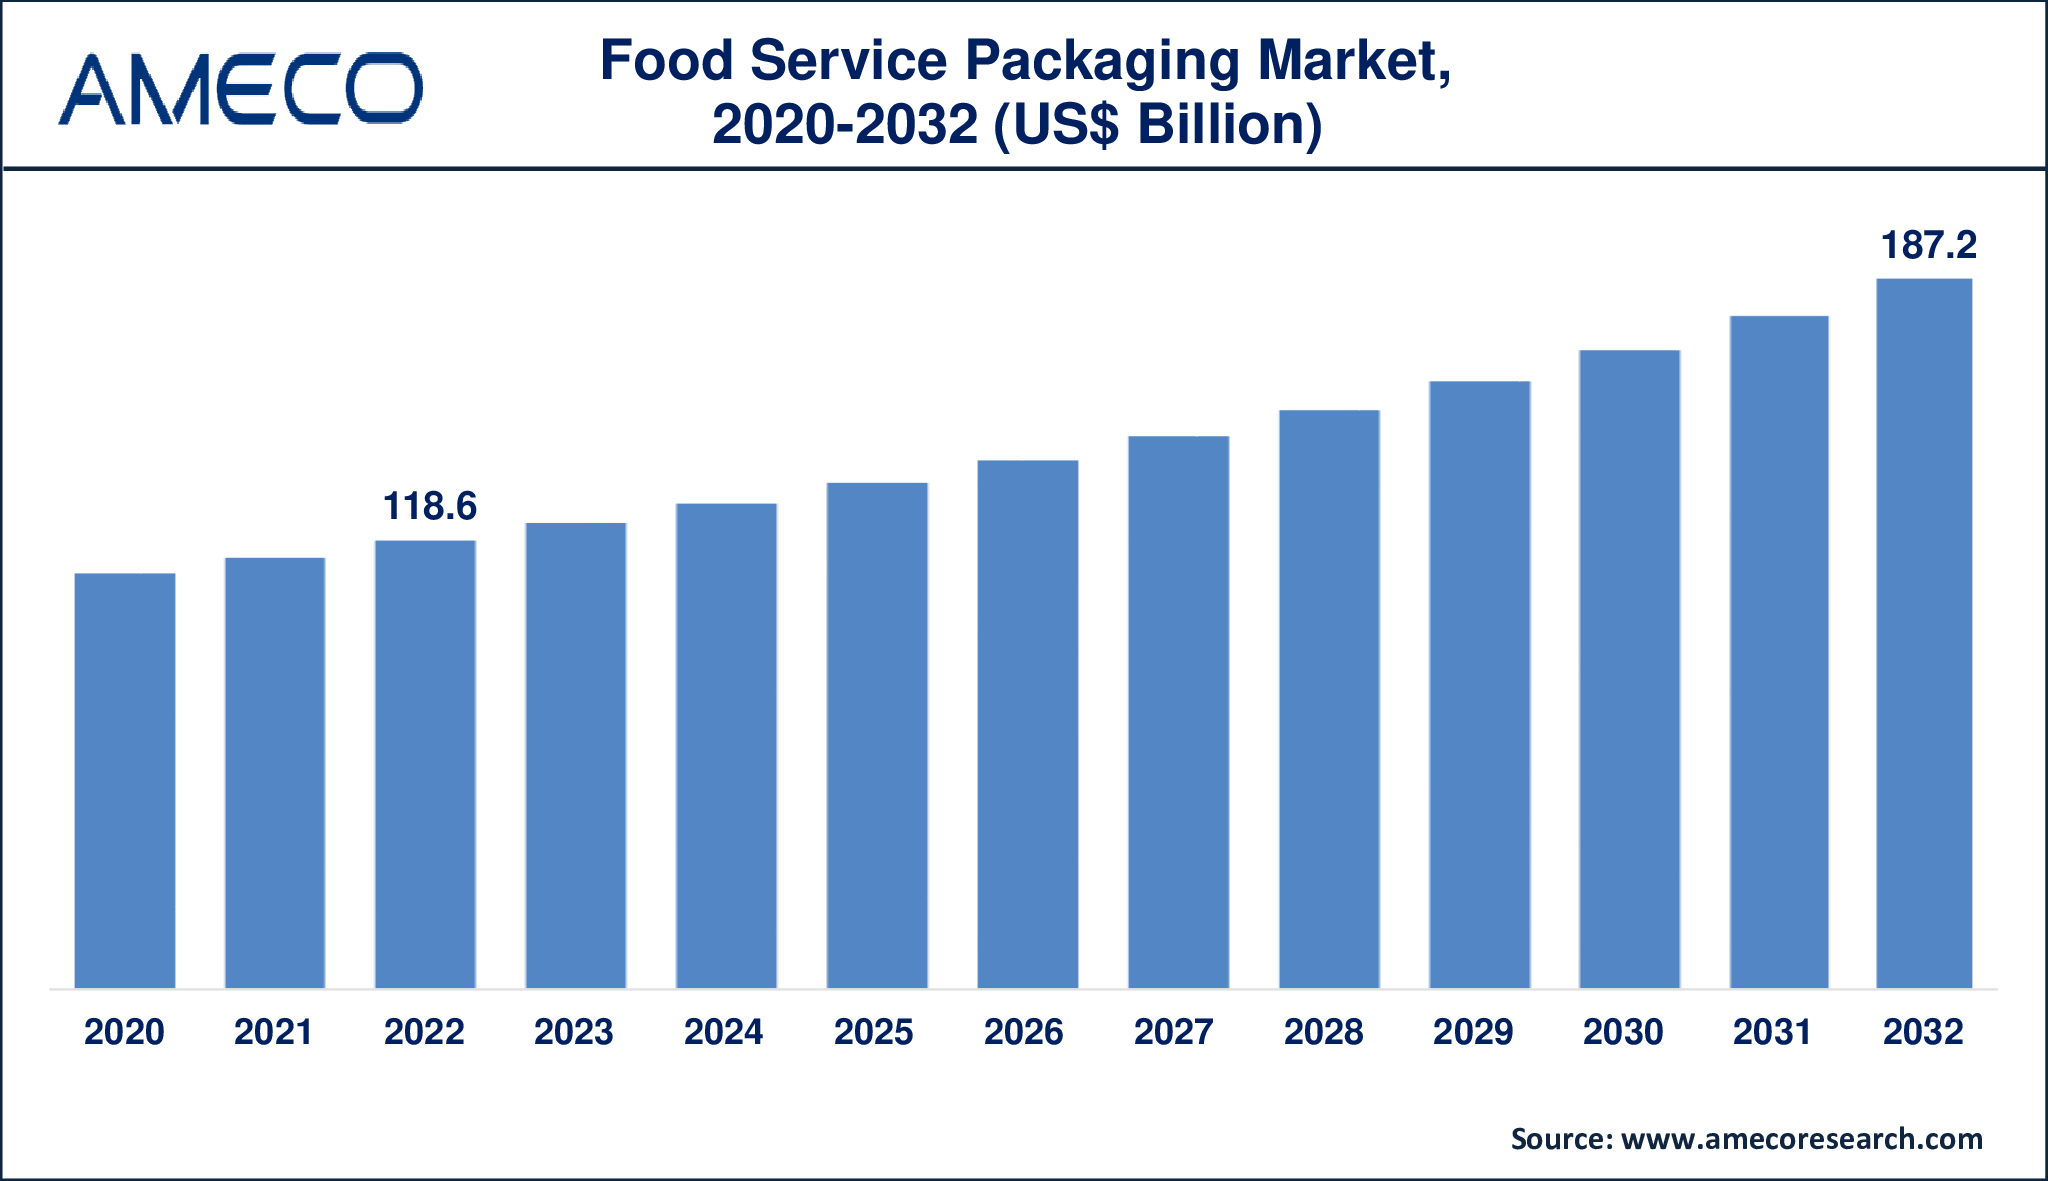 Food Service Packaging Market Dynamics